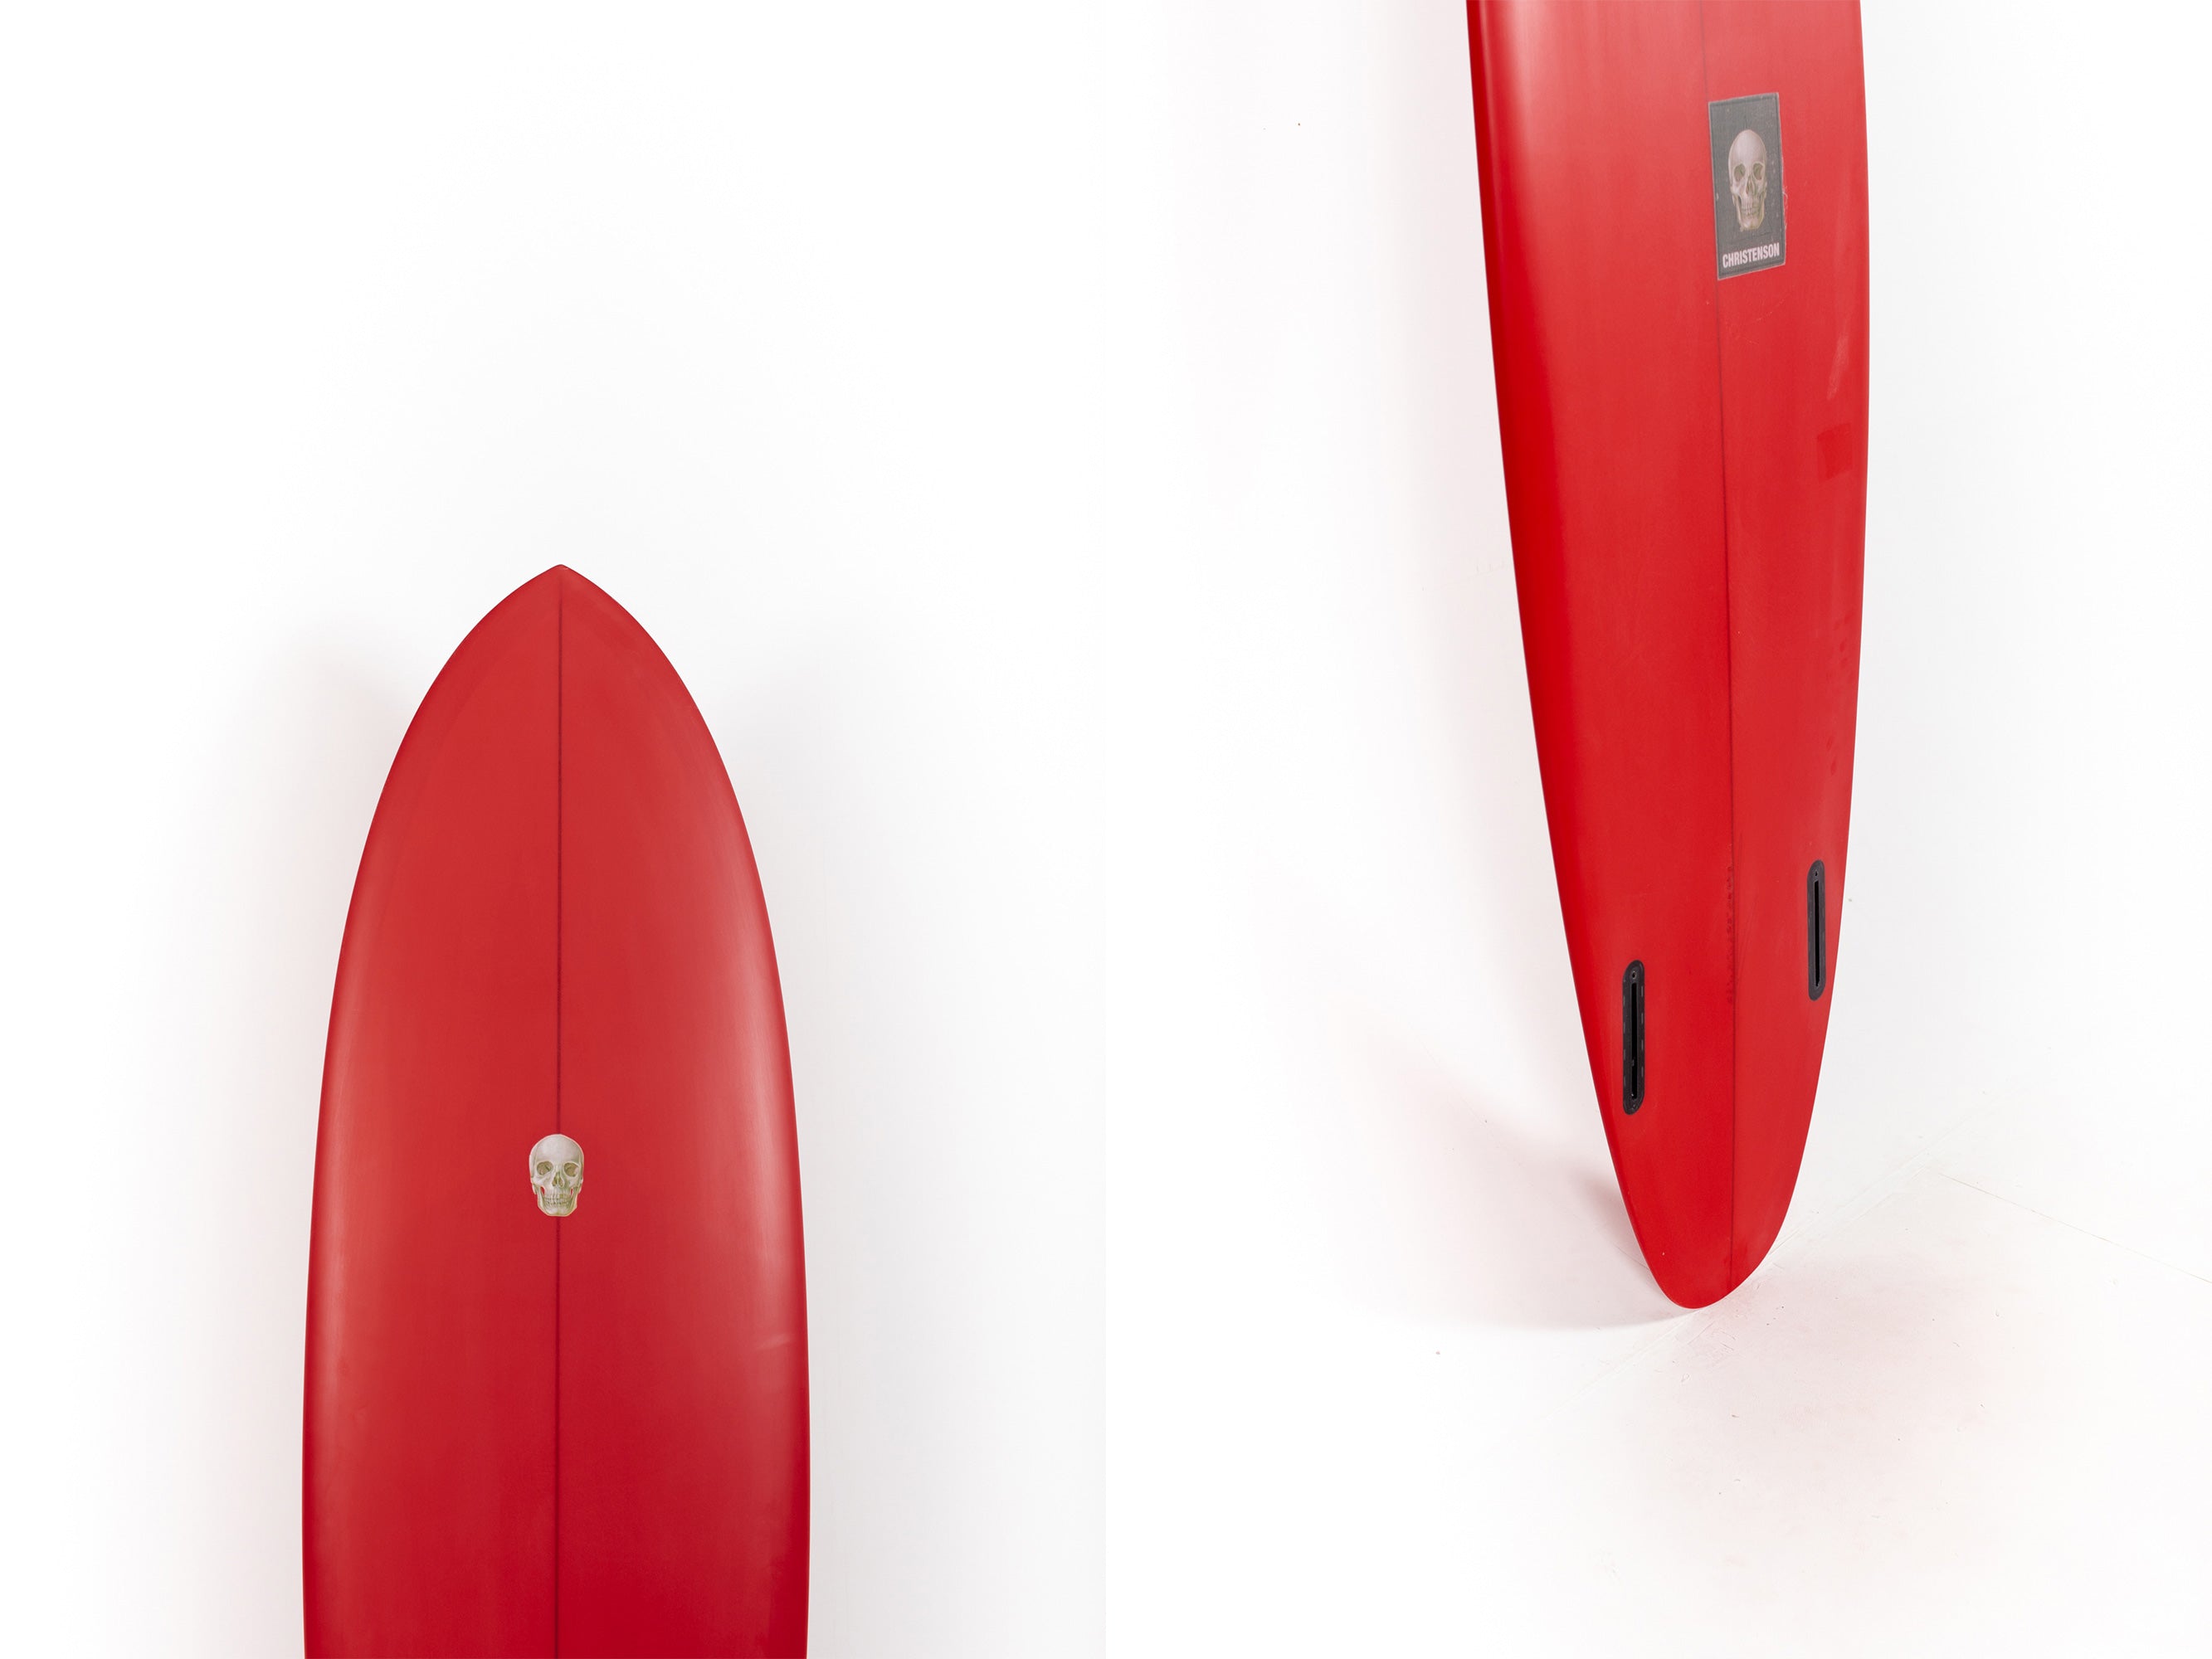 Christenson Surfboards - TWIN TRACKER - 6'6" x 21 x 2 5/8 - CX03303